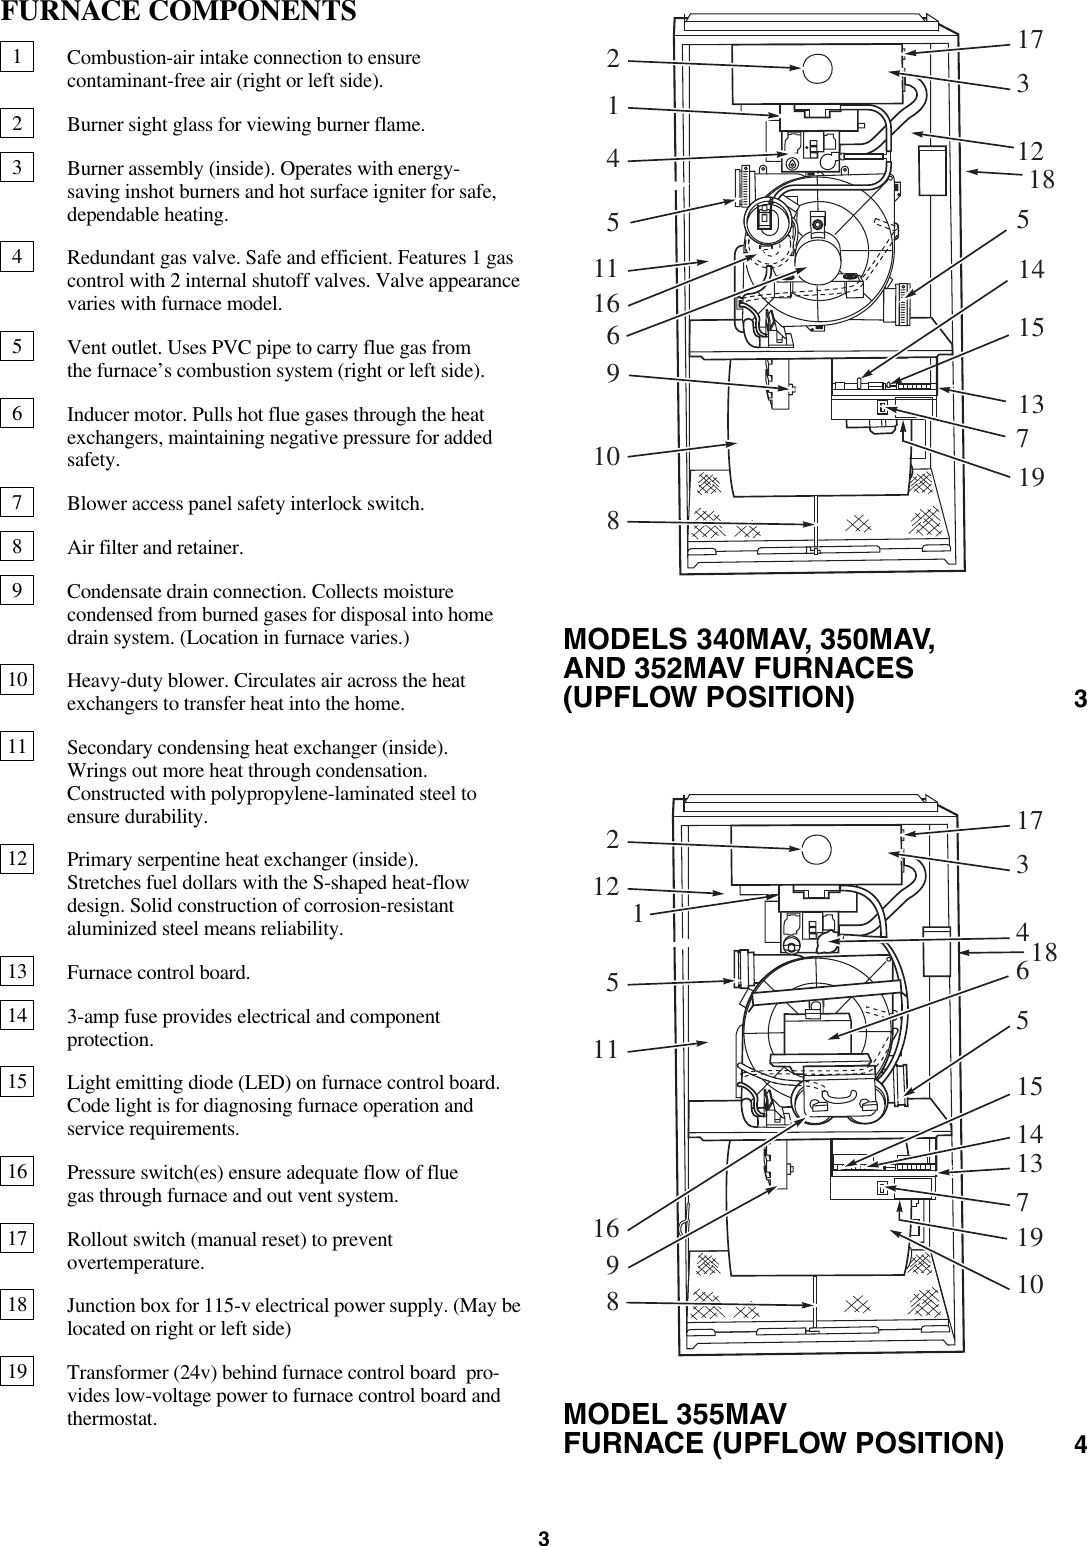 Bryant 350mav Parts Diagram - Free Wiring Diagram